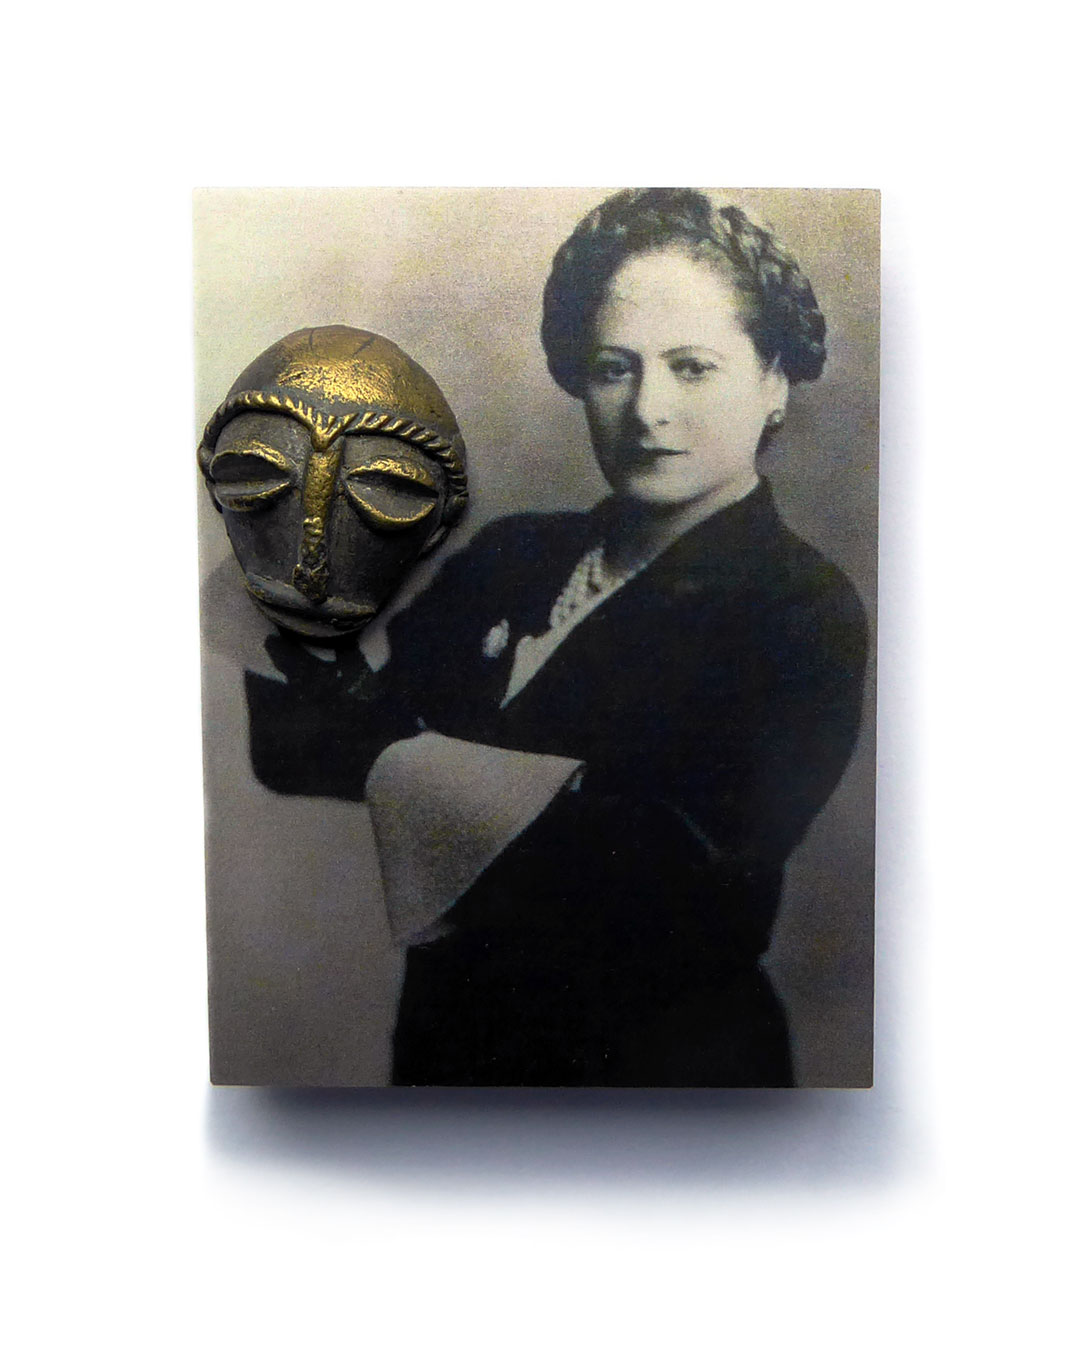 Herman Hermsen, The Mask, 2018, brooch; print on aluminium, wood, brass, 79 x 59 x 24 mm, €425